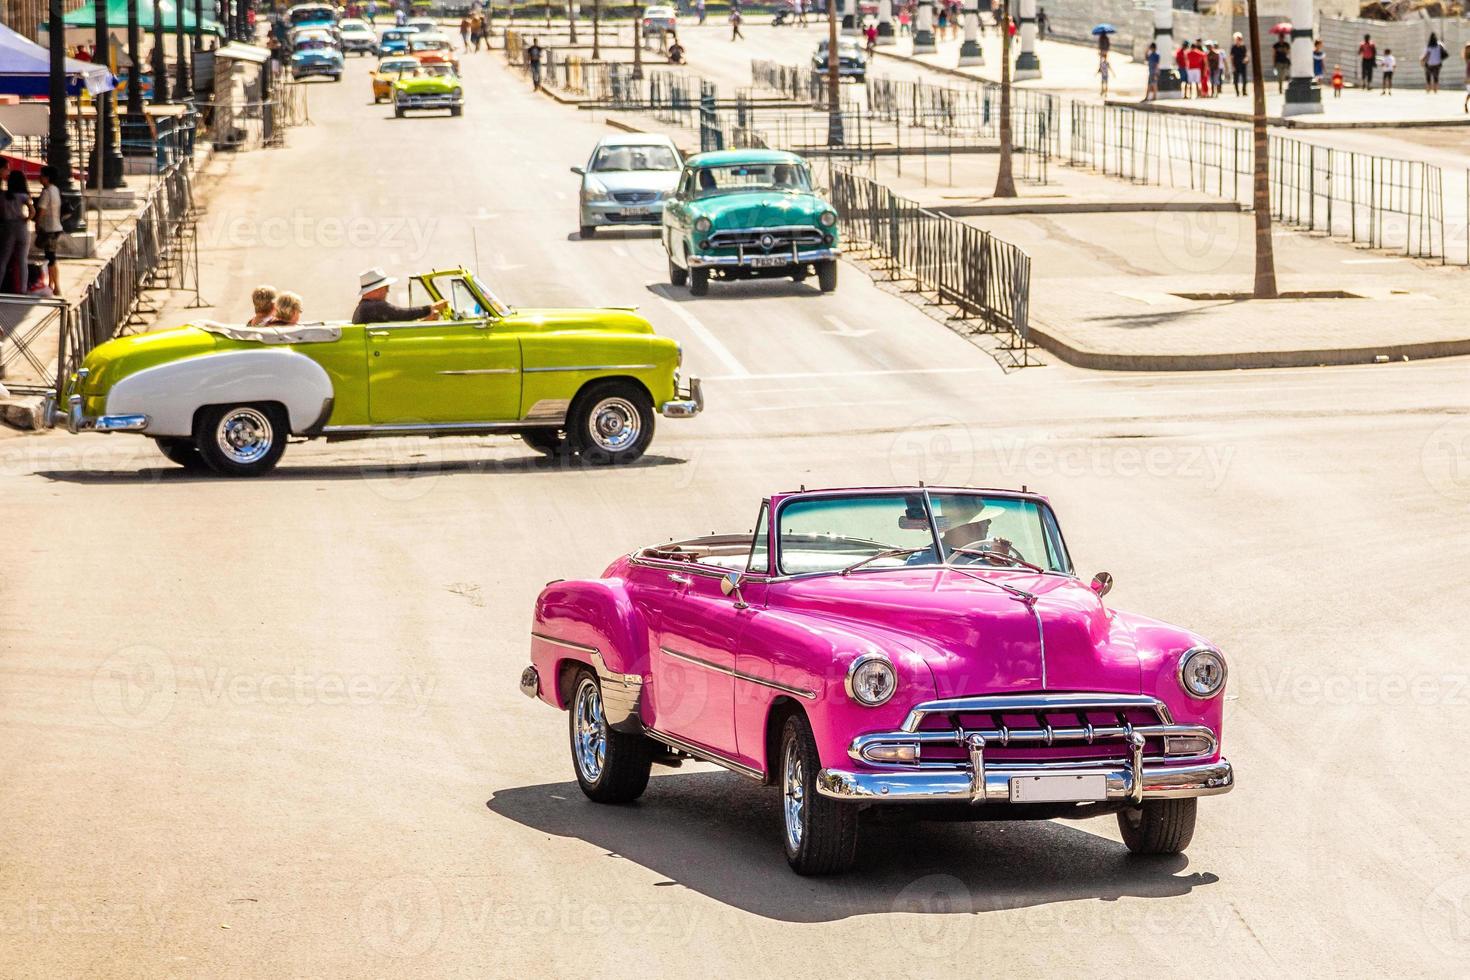 carros retrô antigos antigos na estrada no centro de havana, cuba foto